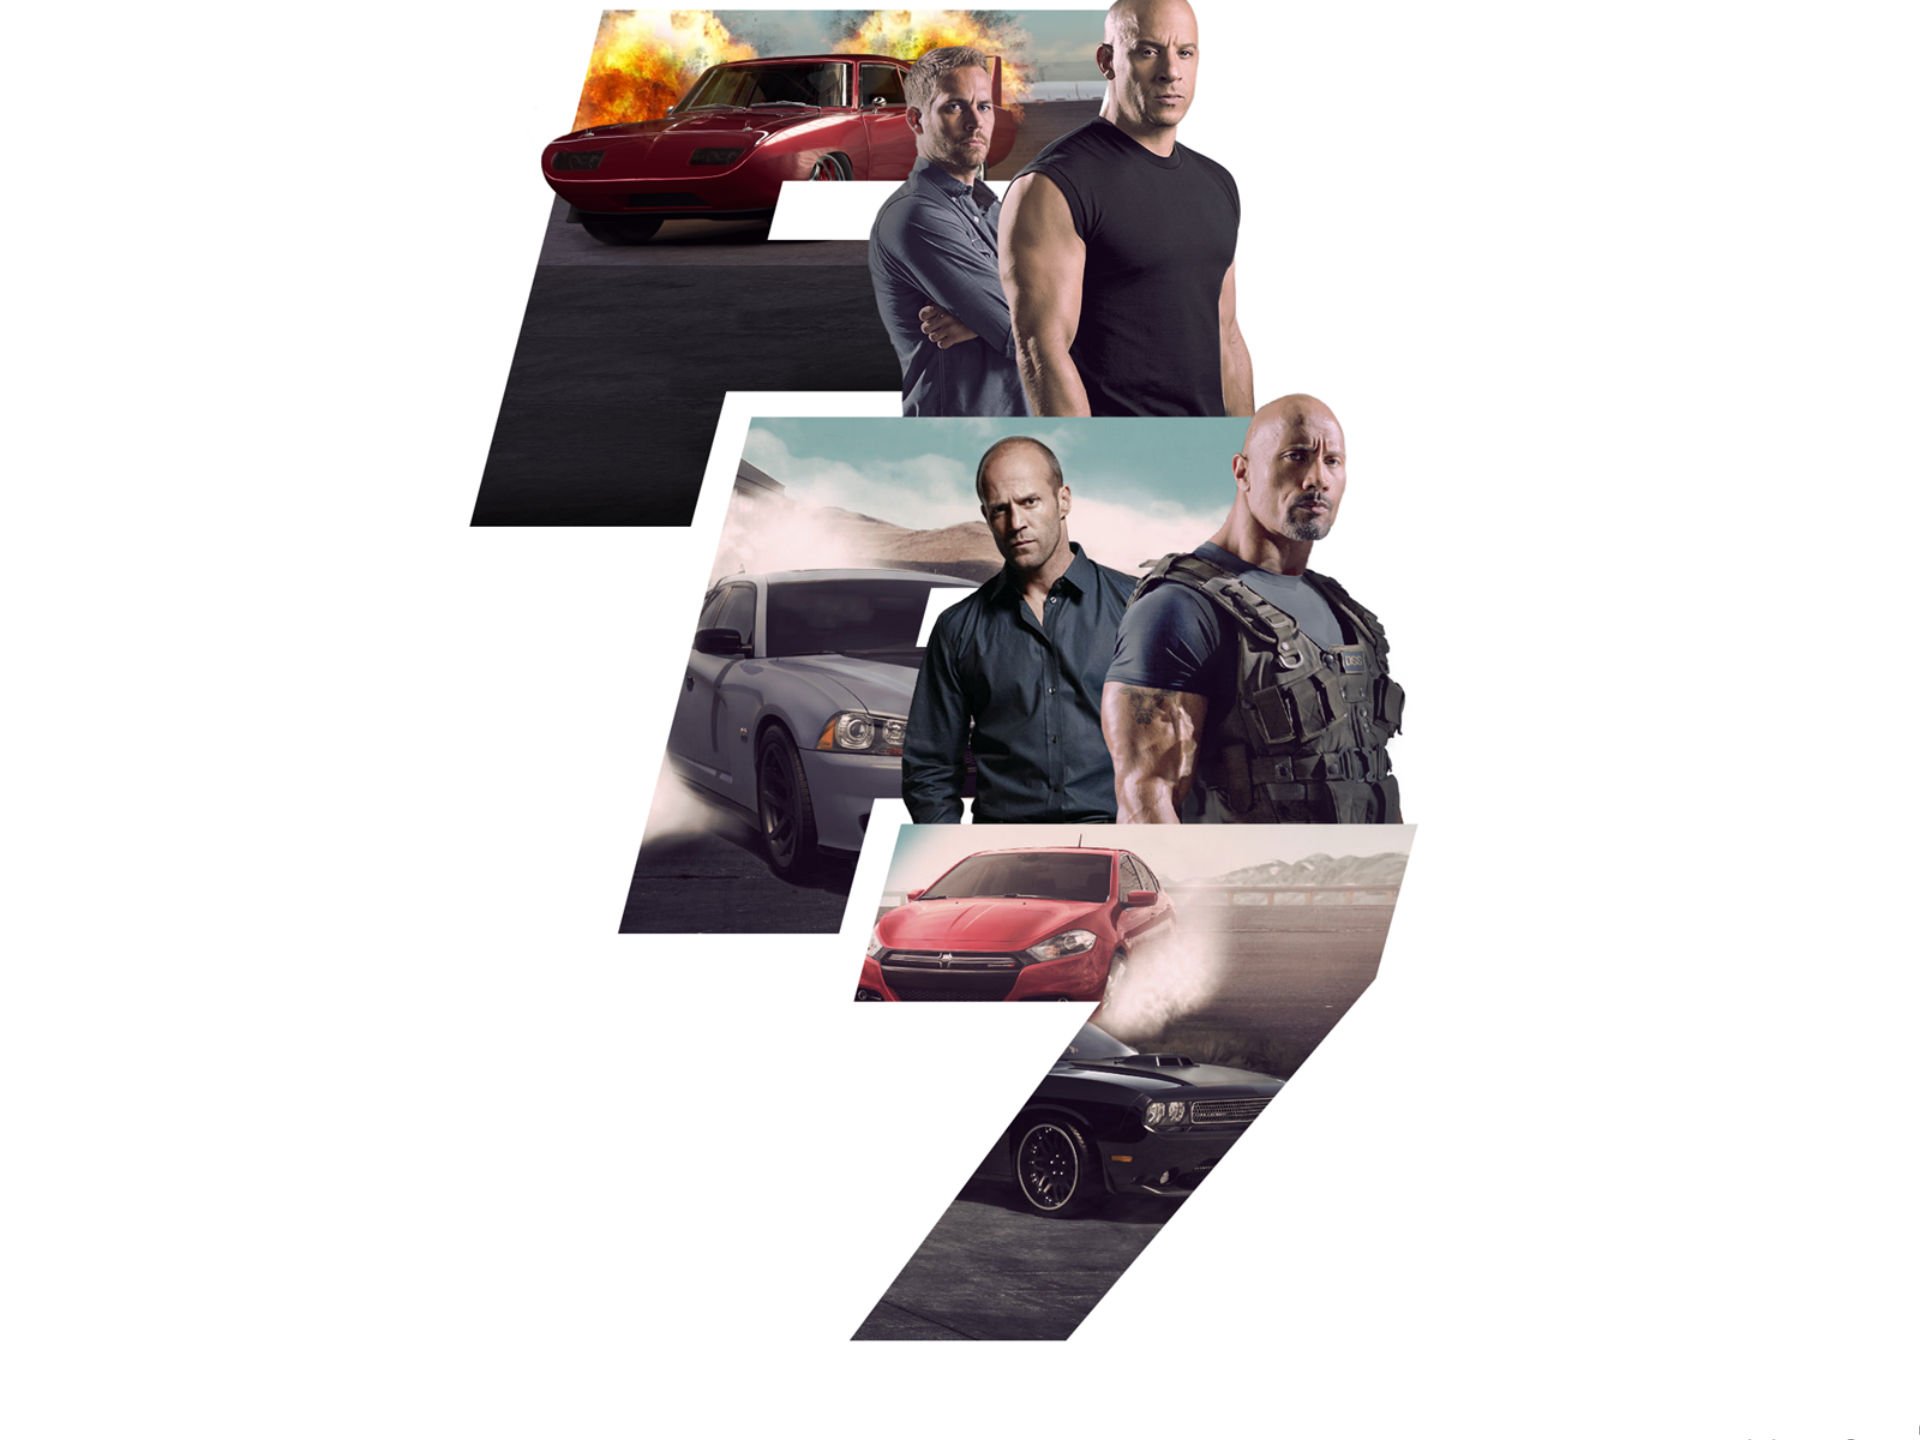 furious 7, Action, Race, Racing, Crime, Thriller, Fast, Furious Wallpaper